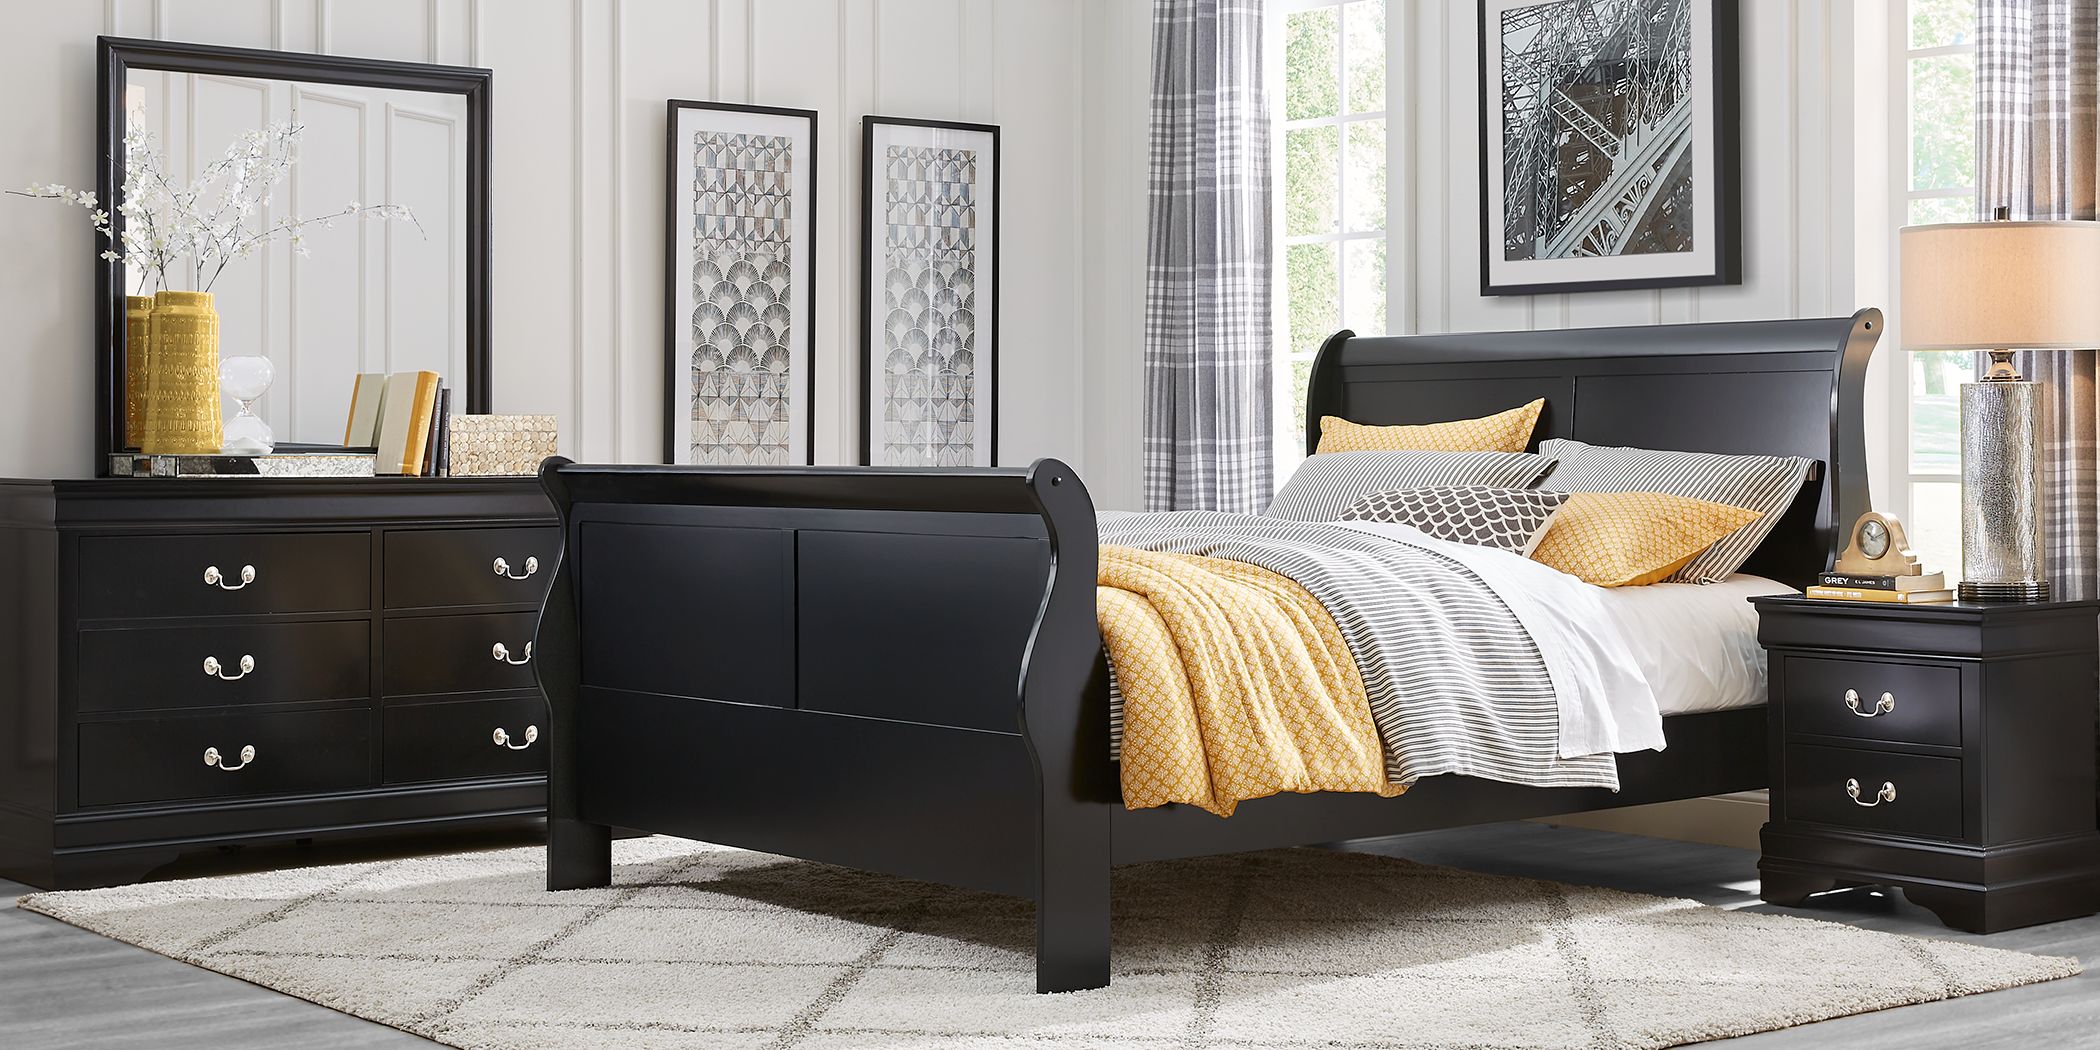 Bedroom Furniture Rooms To, Black Leather Bedroom Sets Queen